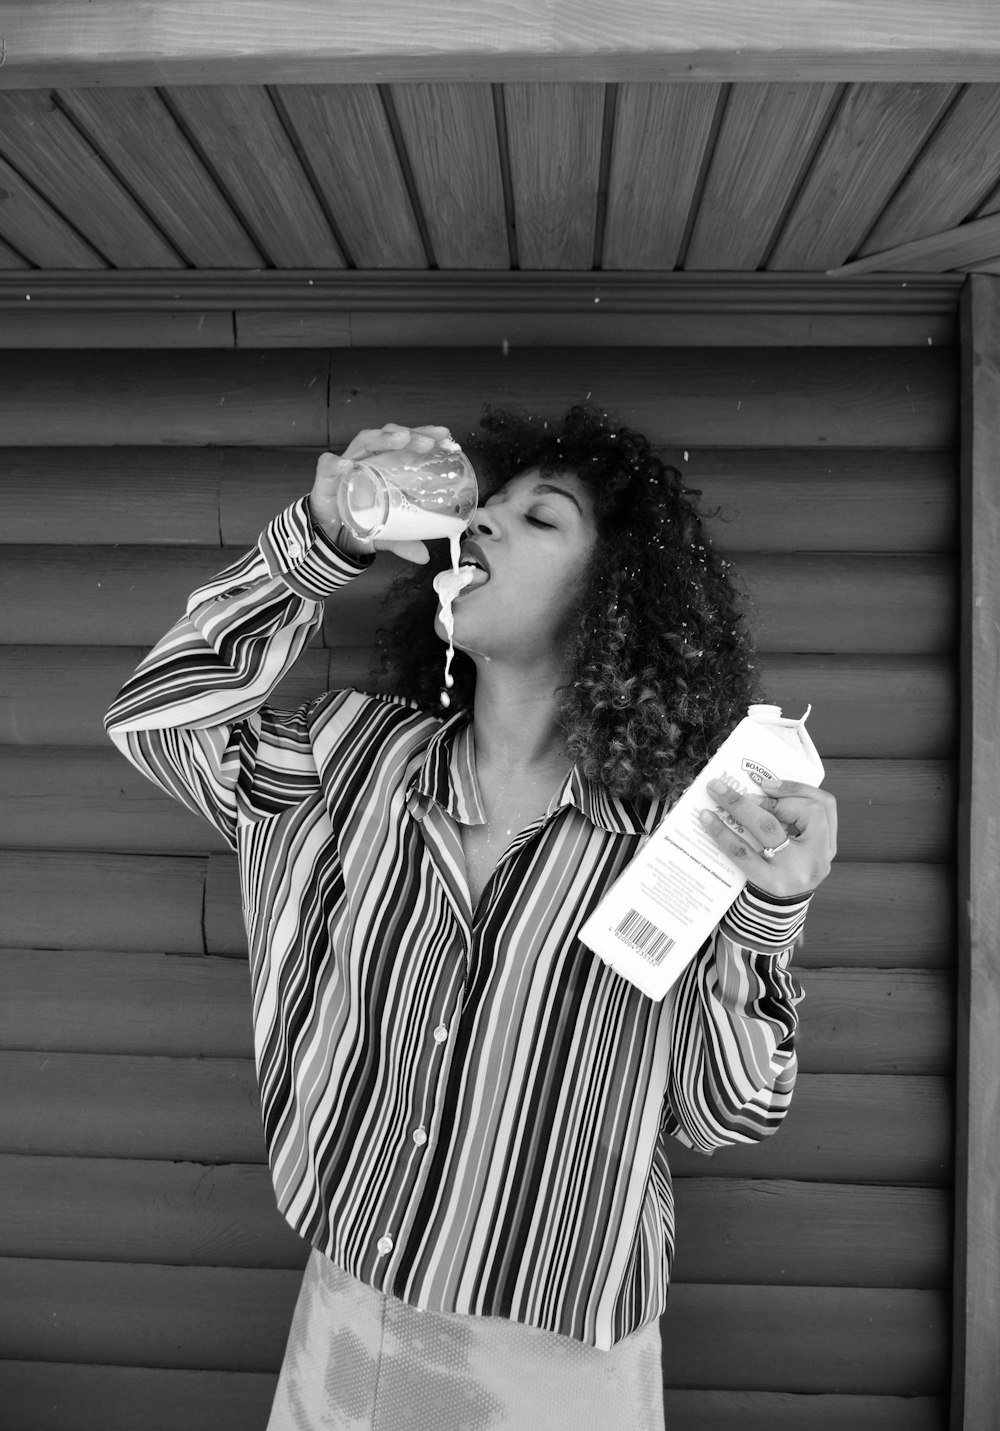 greyscale photo of woman drinking milk near wood wall panel